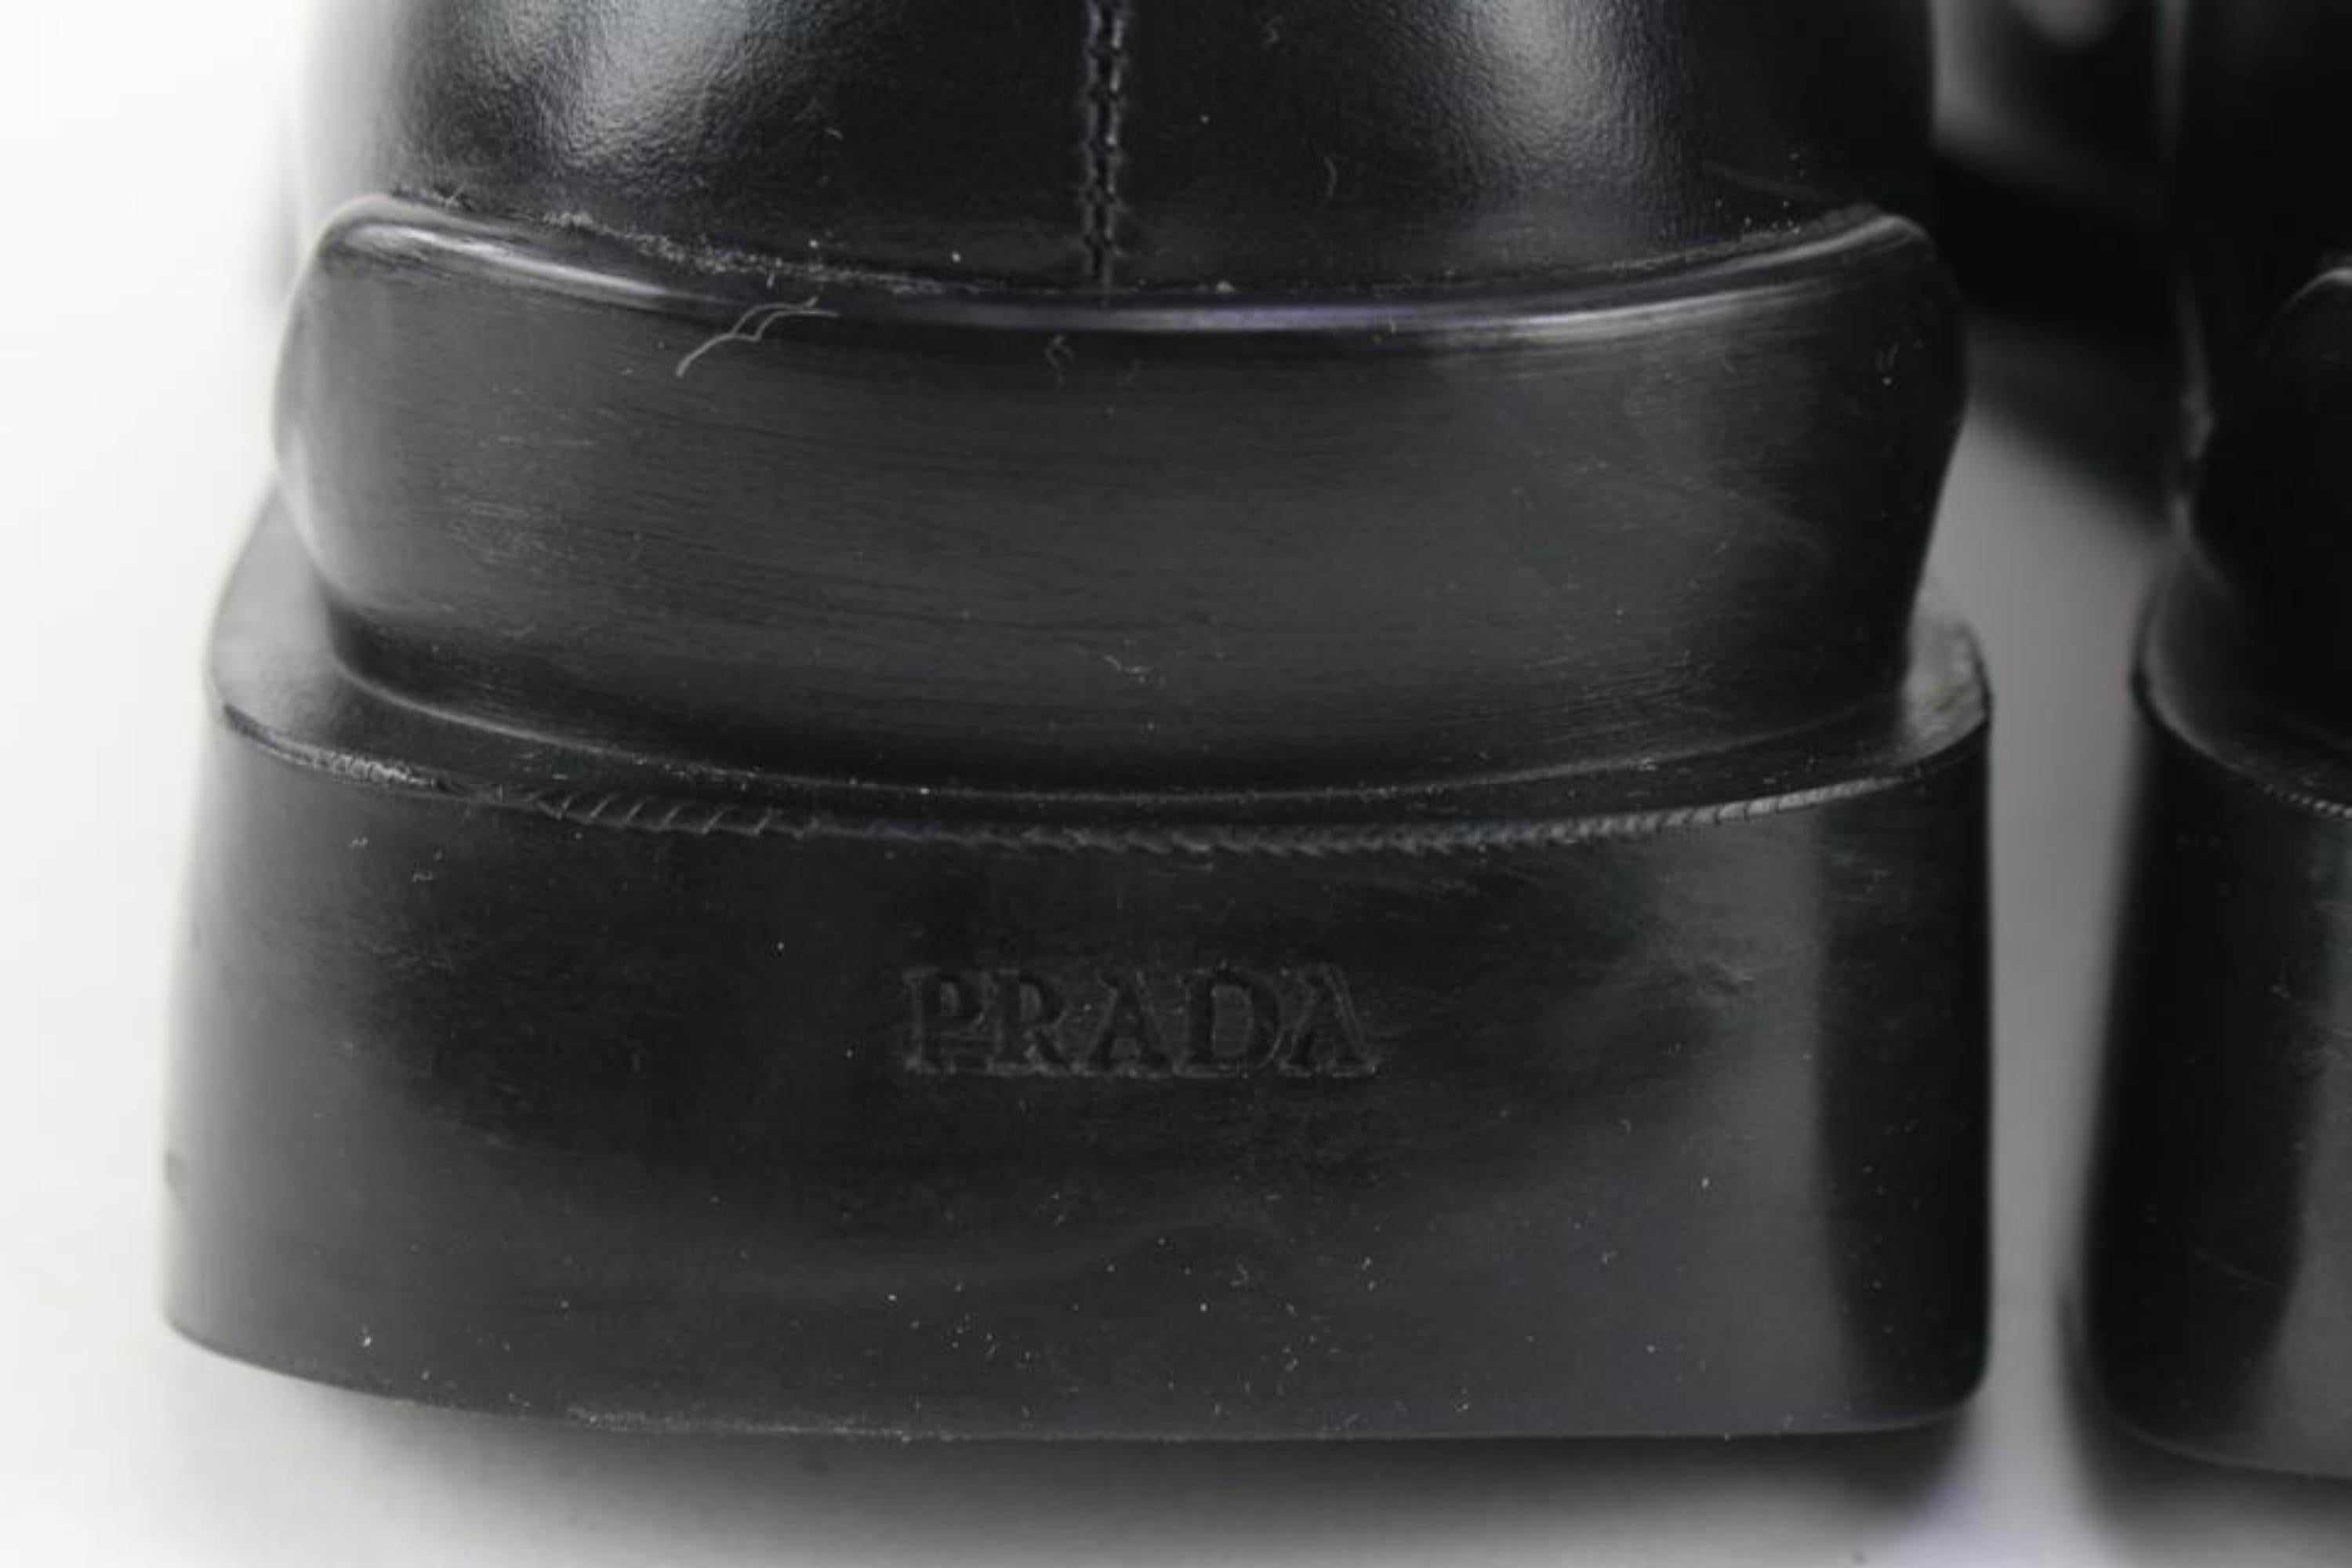 Prada Men's 7 US Black Leather Dress Sneaker 1223p20 8